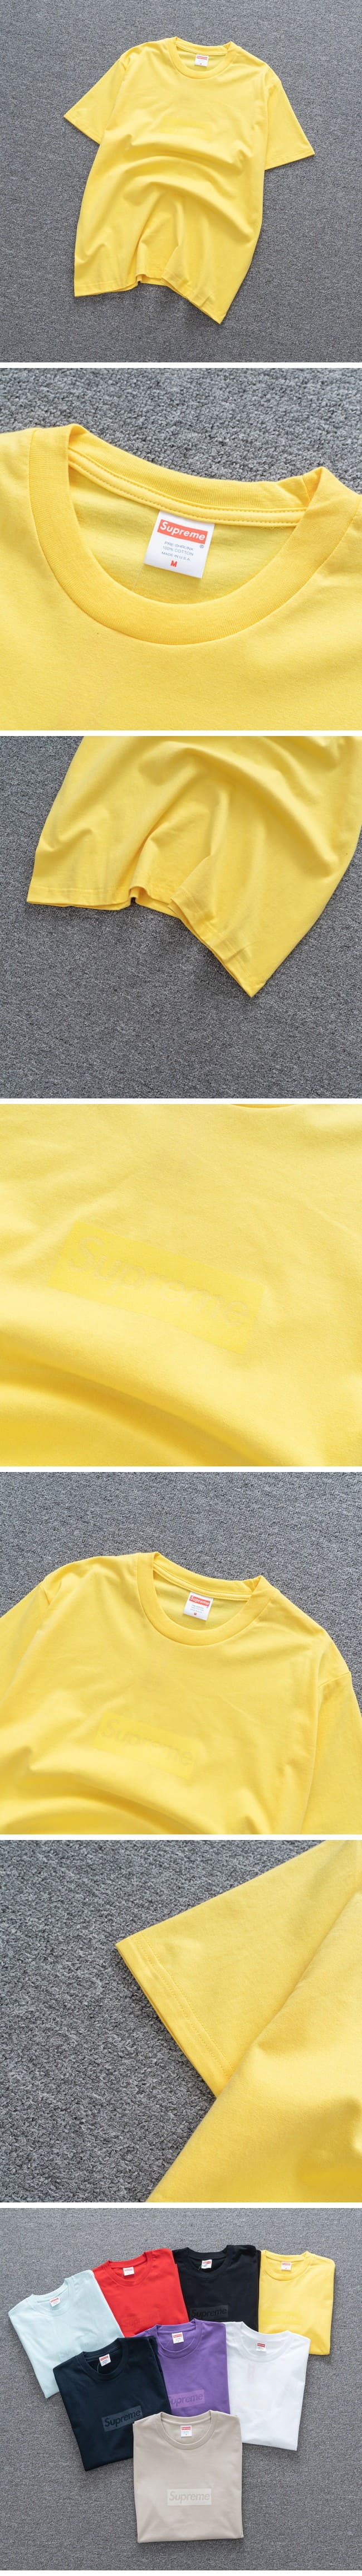 Supreme Tonal Box Logo Tee Yellow シュプリーム トーナル ボックスロゴ Tシャツ イエロー